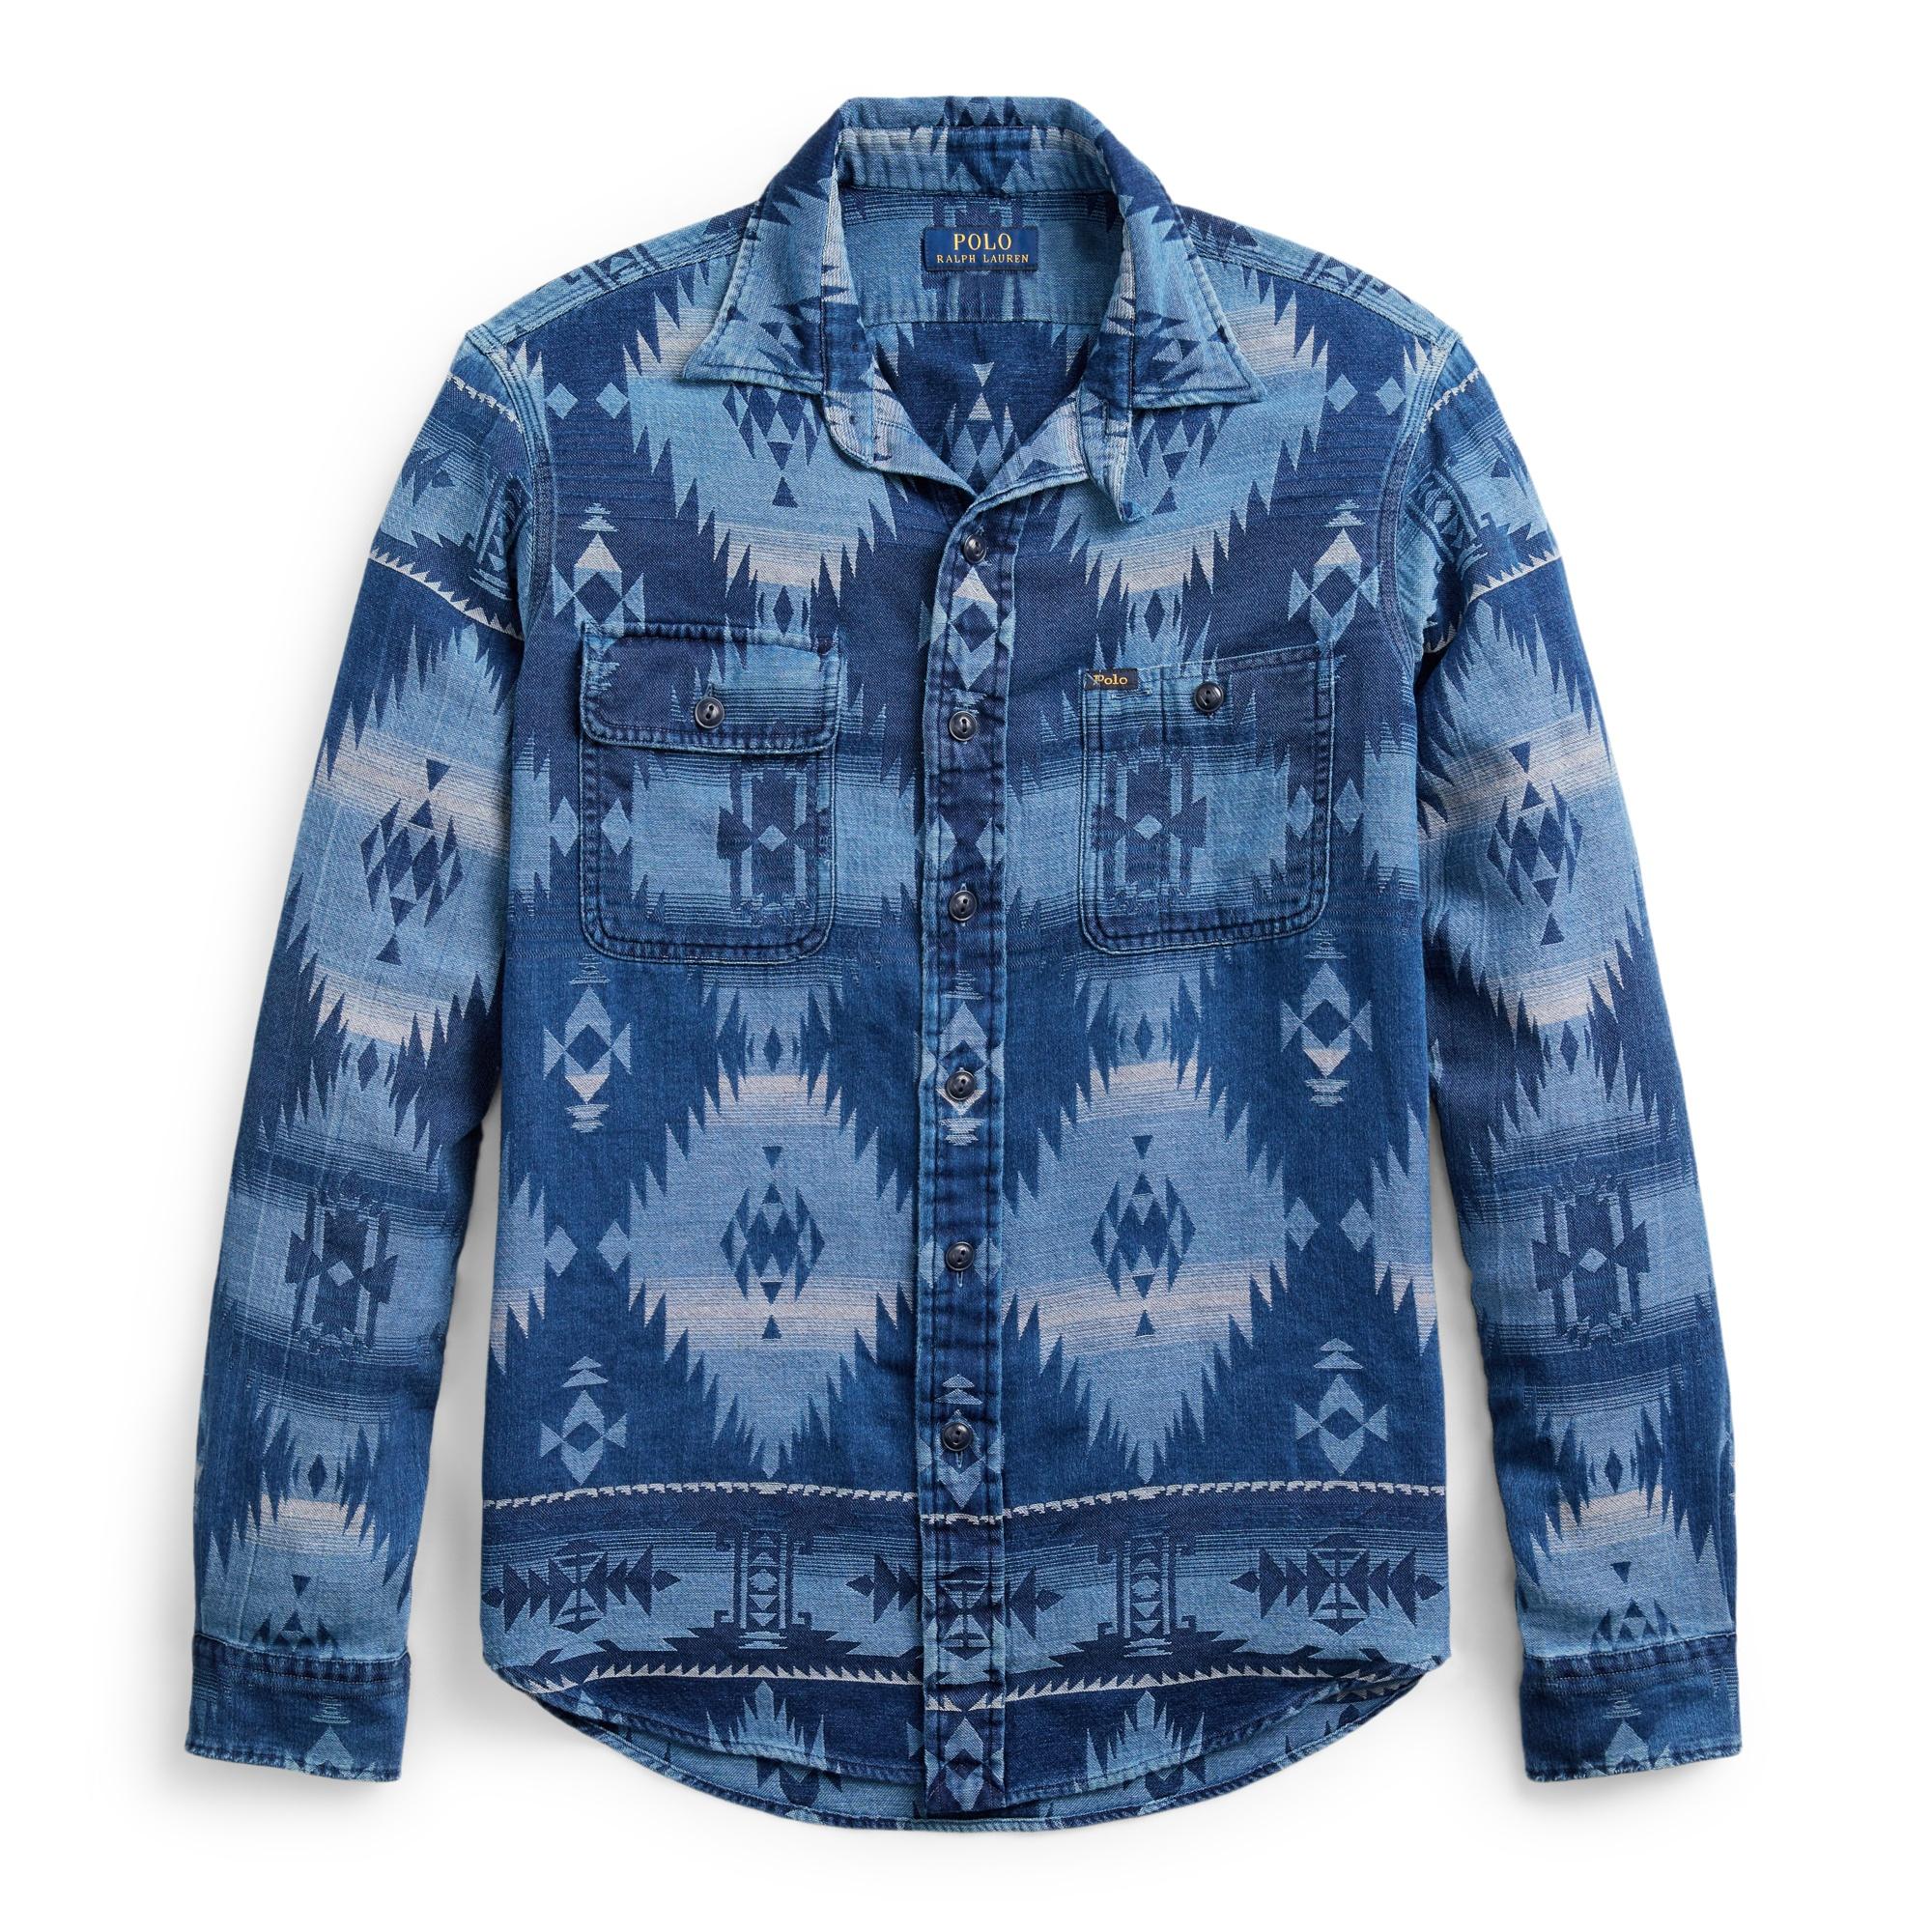 Ralph Lauren Cotton The Indigo Southwestern Shirt in Blue for Men - Lyst